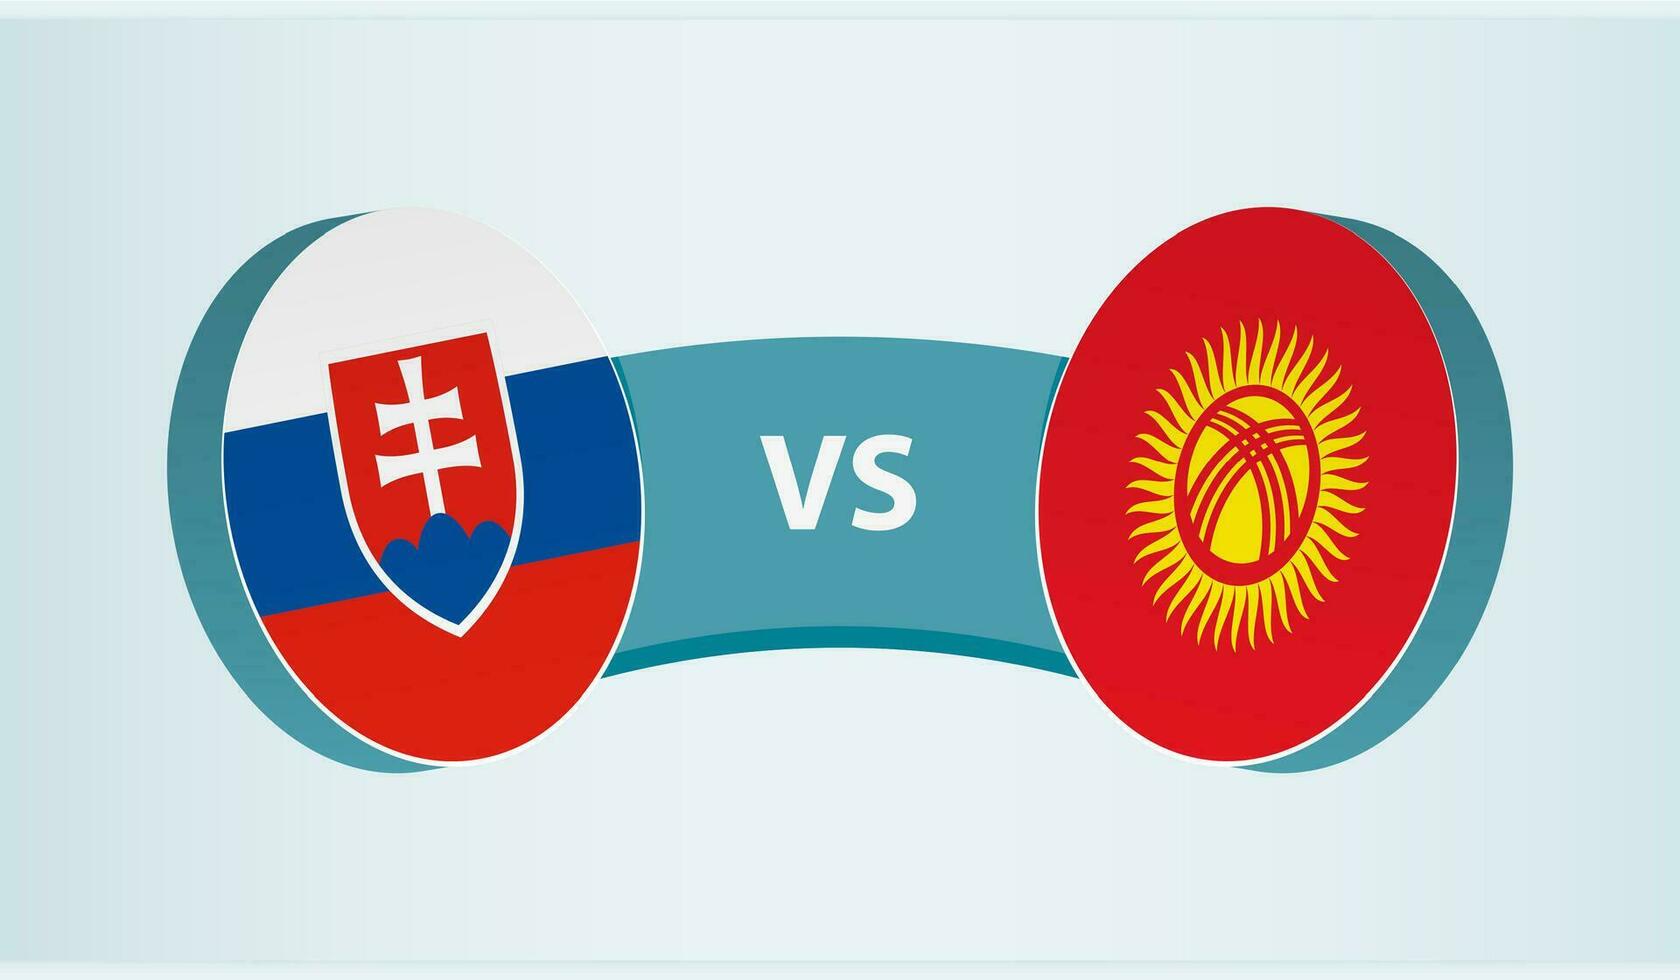 slovakia mot Kirgizistan, team sporter konkurrens begrepp. vektor